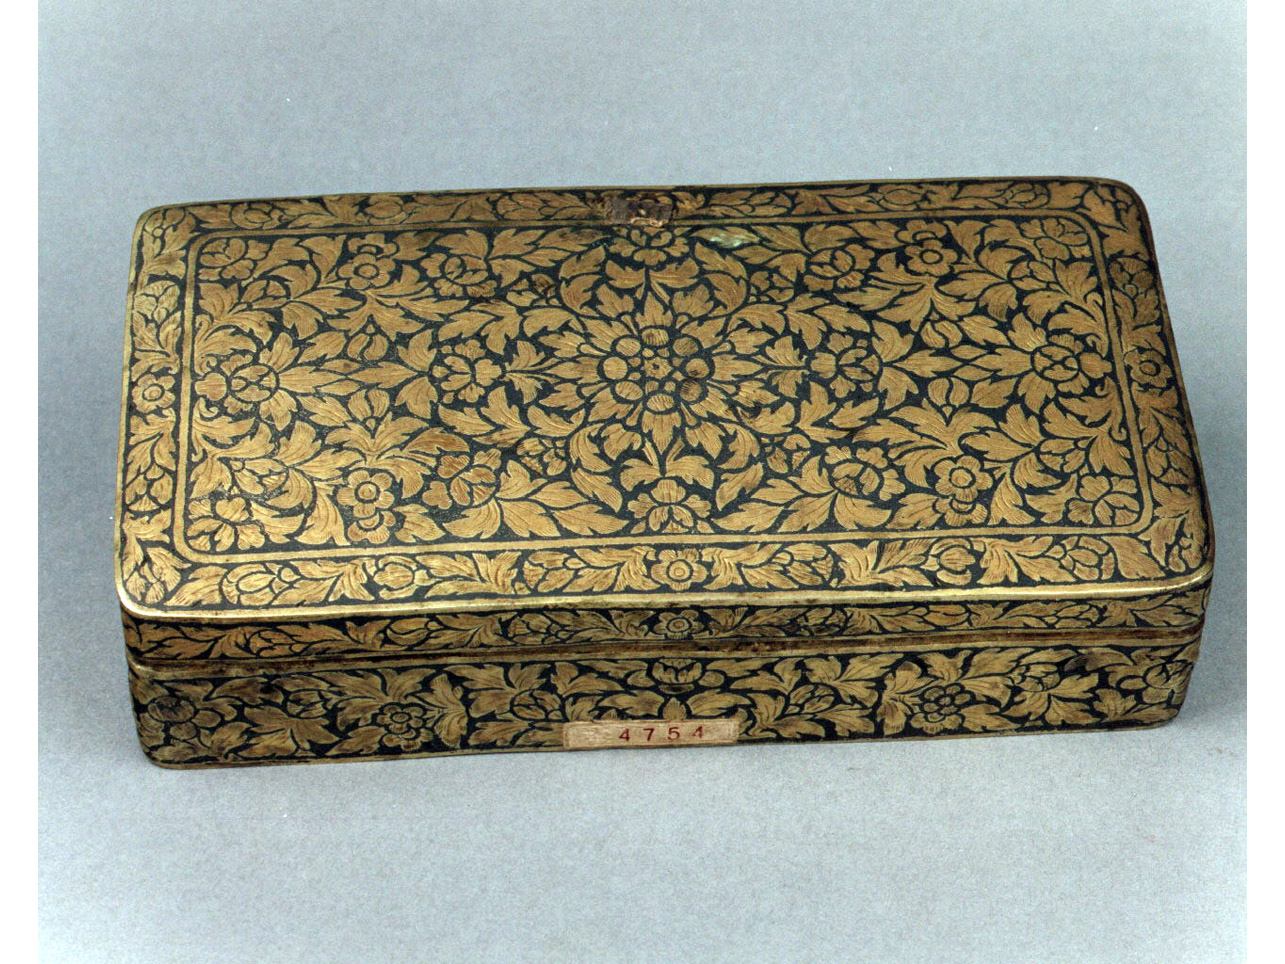 motivi decorativi floreali (scatola) - manifattura indiana (sec. XVIII)